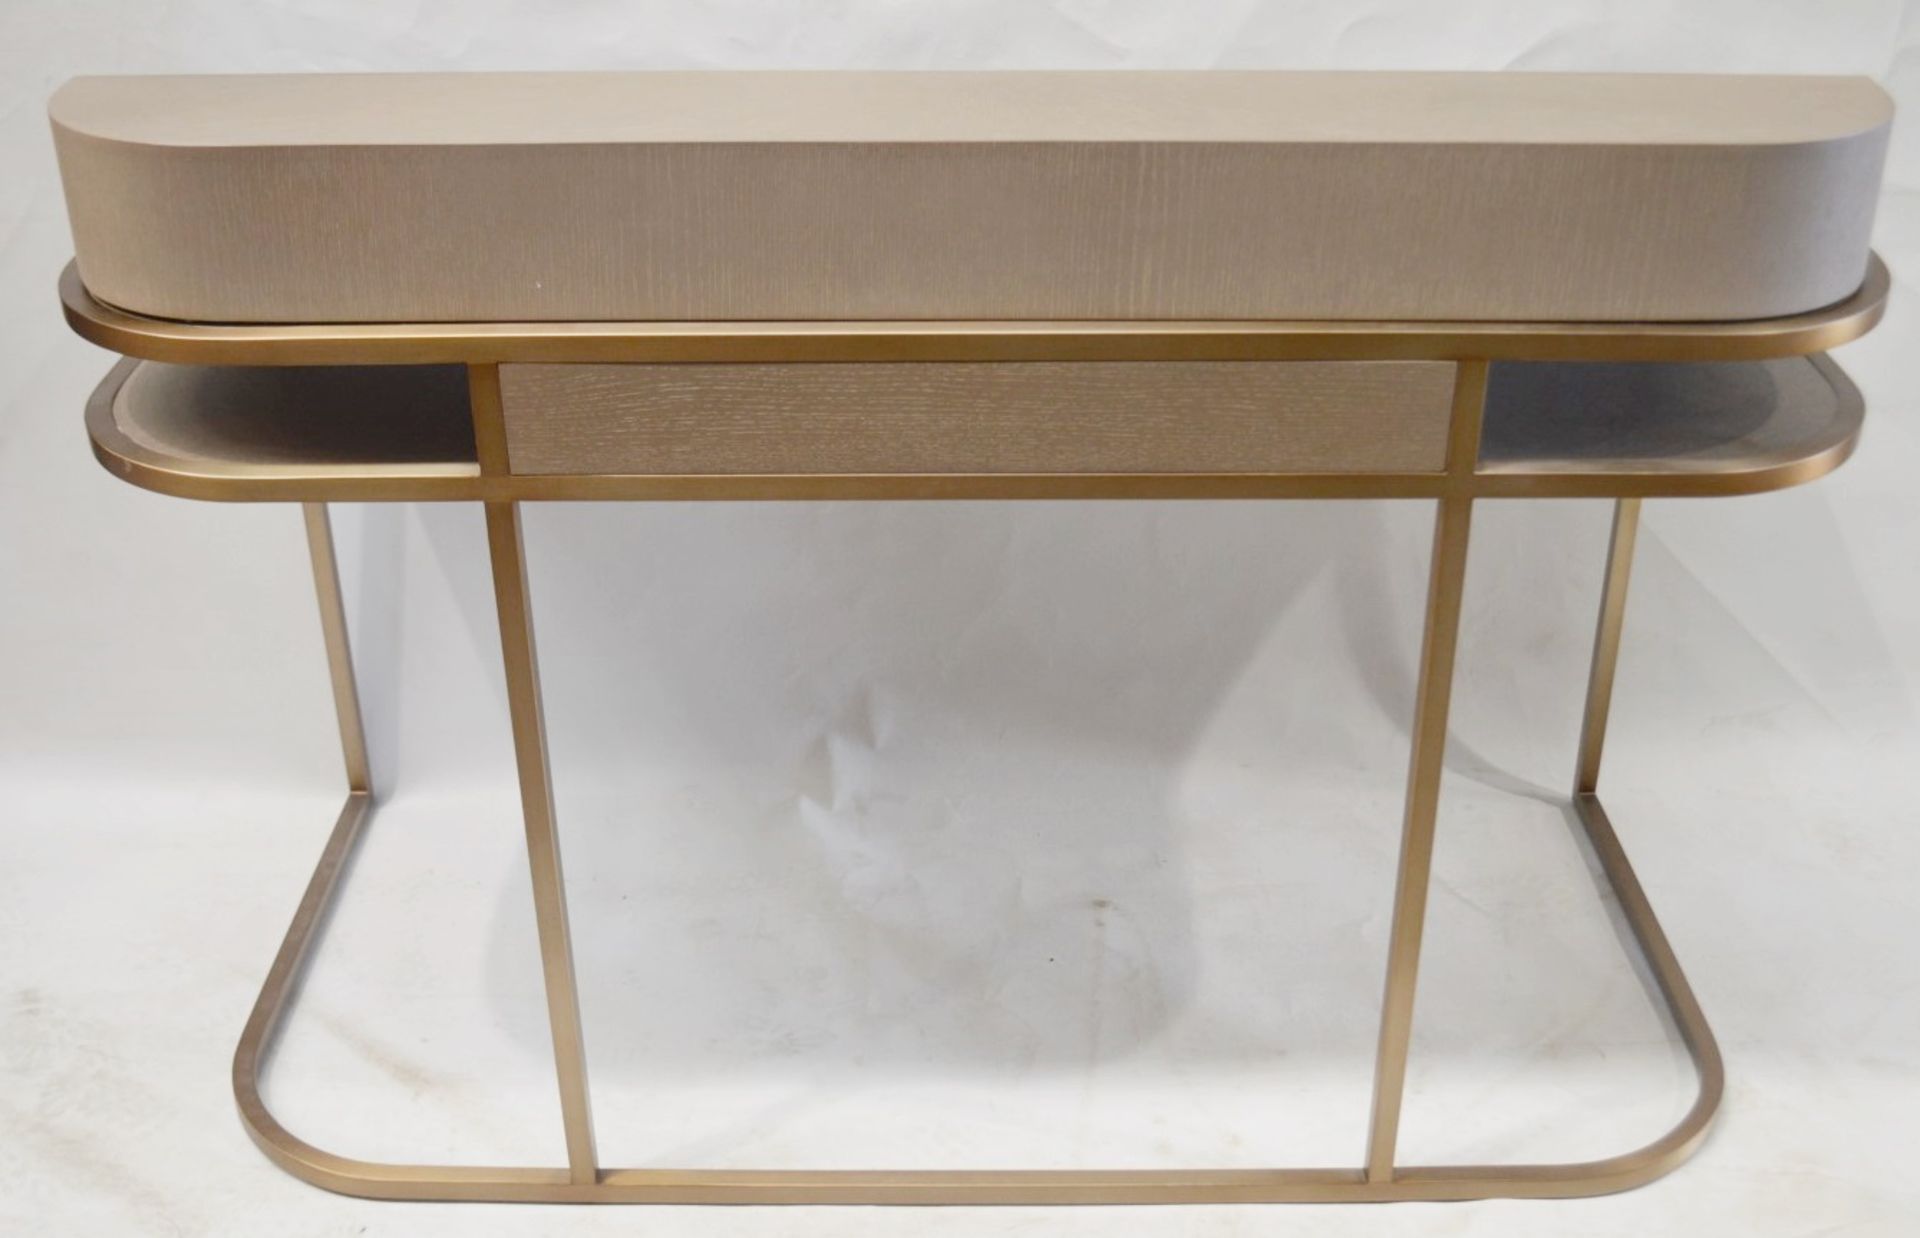 1 x EICHHOLTZ 'Highland' Designer Desk With Washed Oak And Brushed Brass Finishes - Ex-Display - - Image 10 of 12